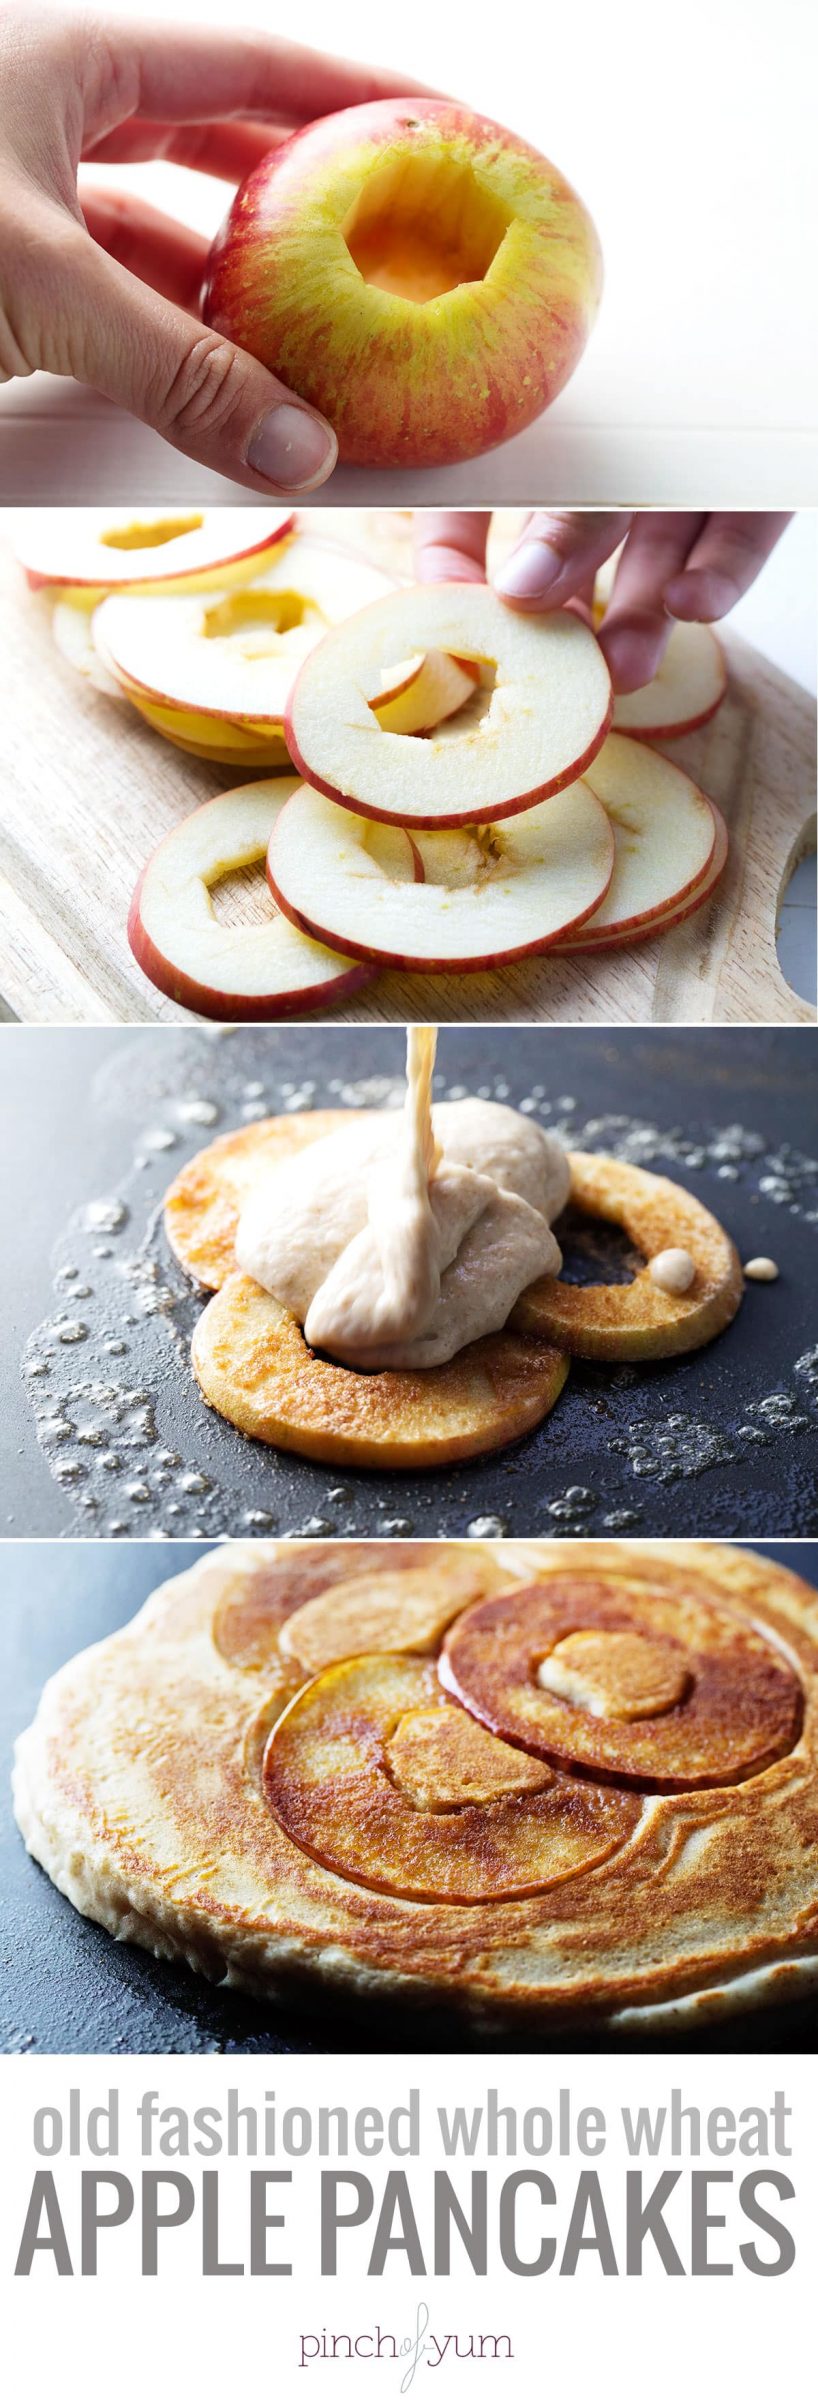 Cutting apples to make apple pancakes.